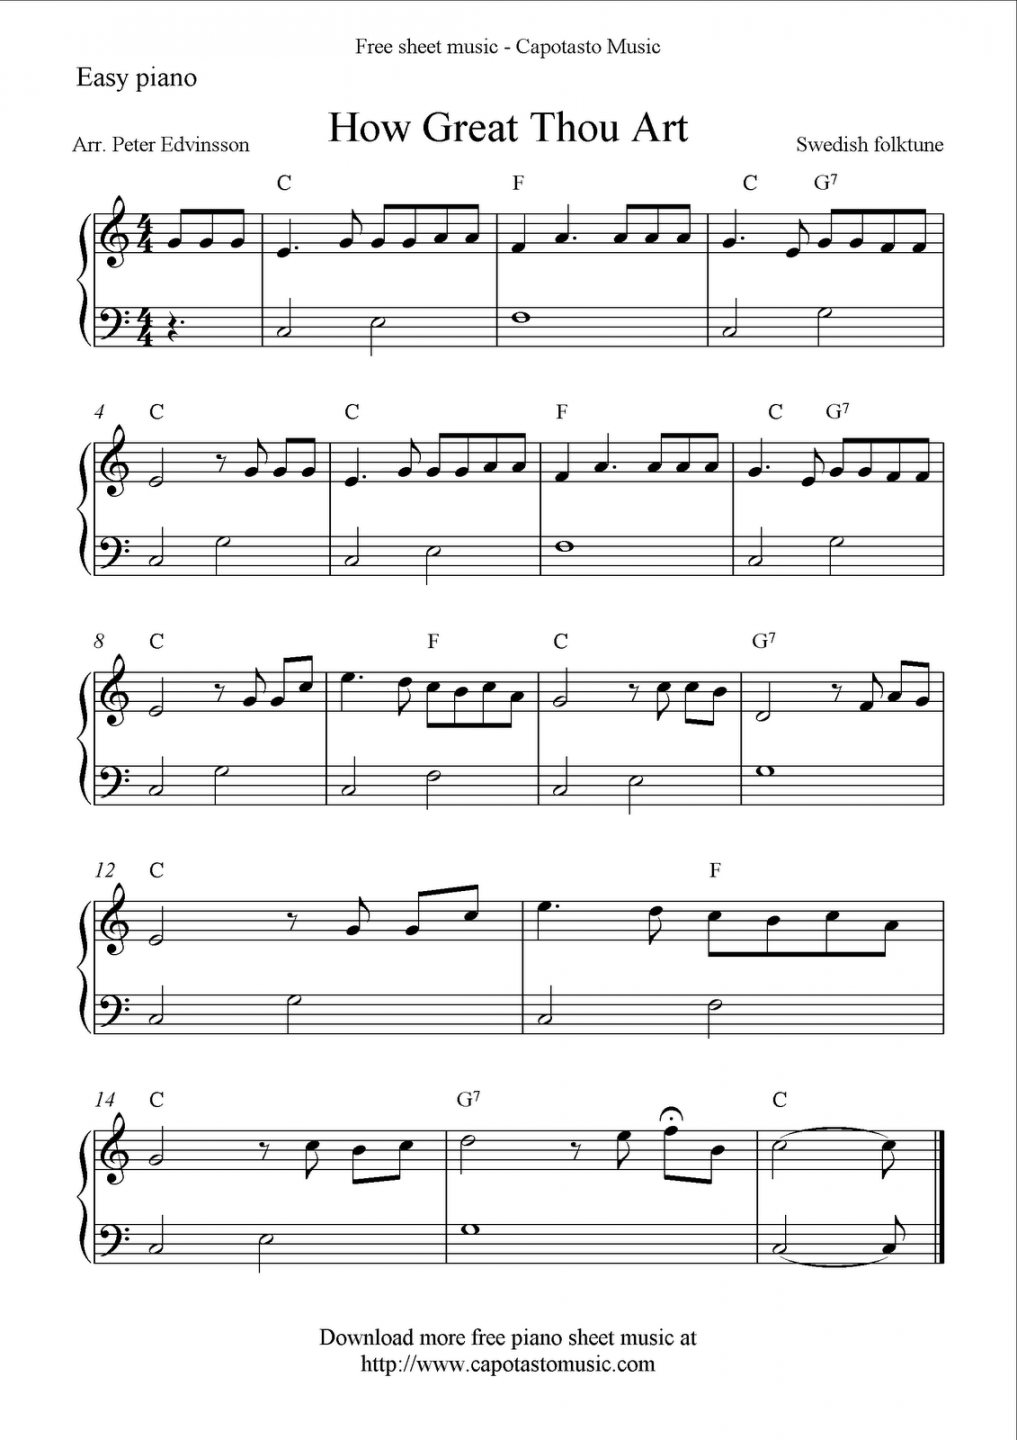 Free Printable Sheet Music For Piano - Printable - Free easy piano sheet music, How Great Thou Art  Piano sheet